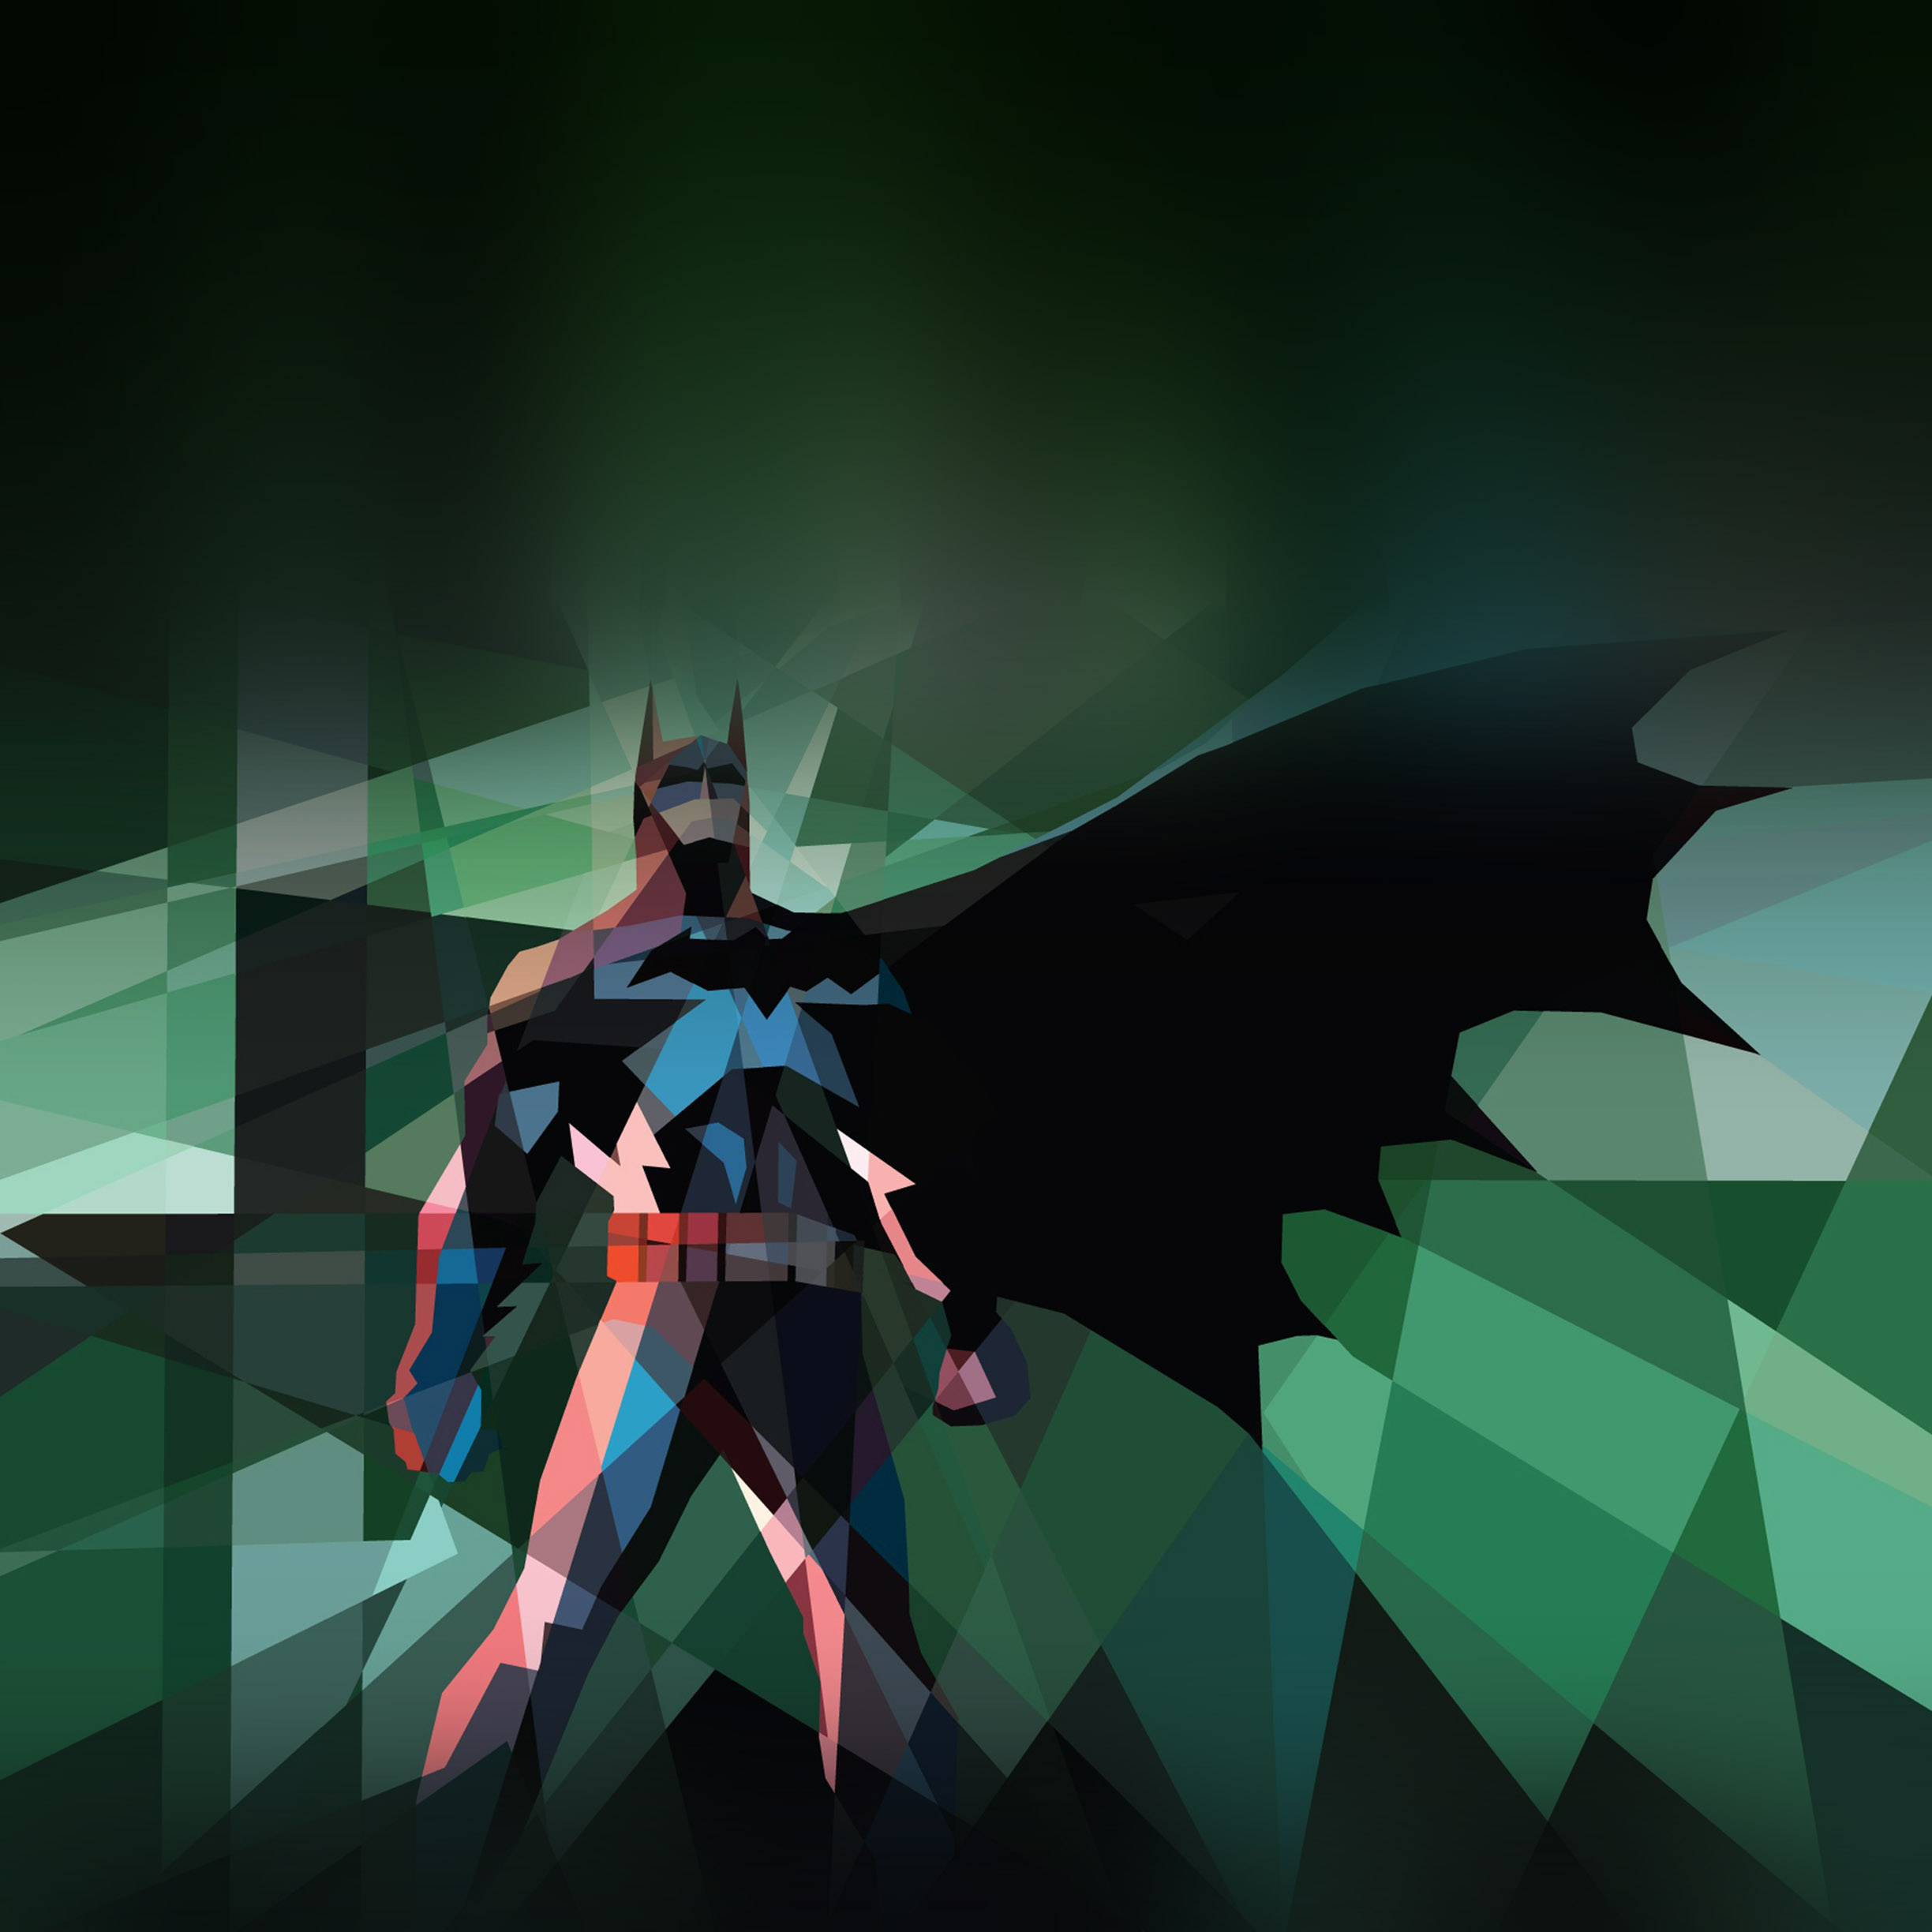 superhero wallpaper hd,fictional character,cg artwork,justice league,batman,superhero